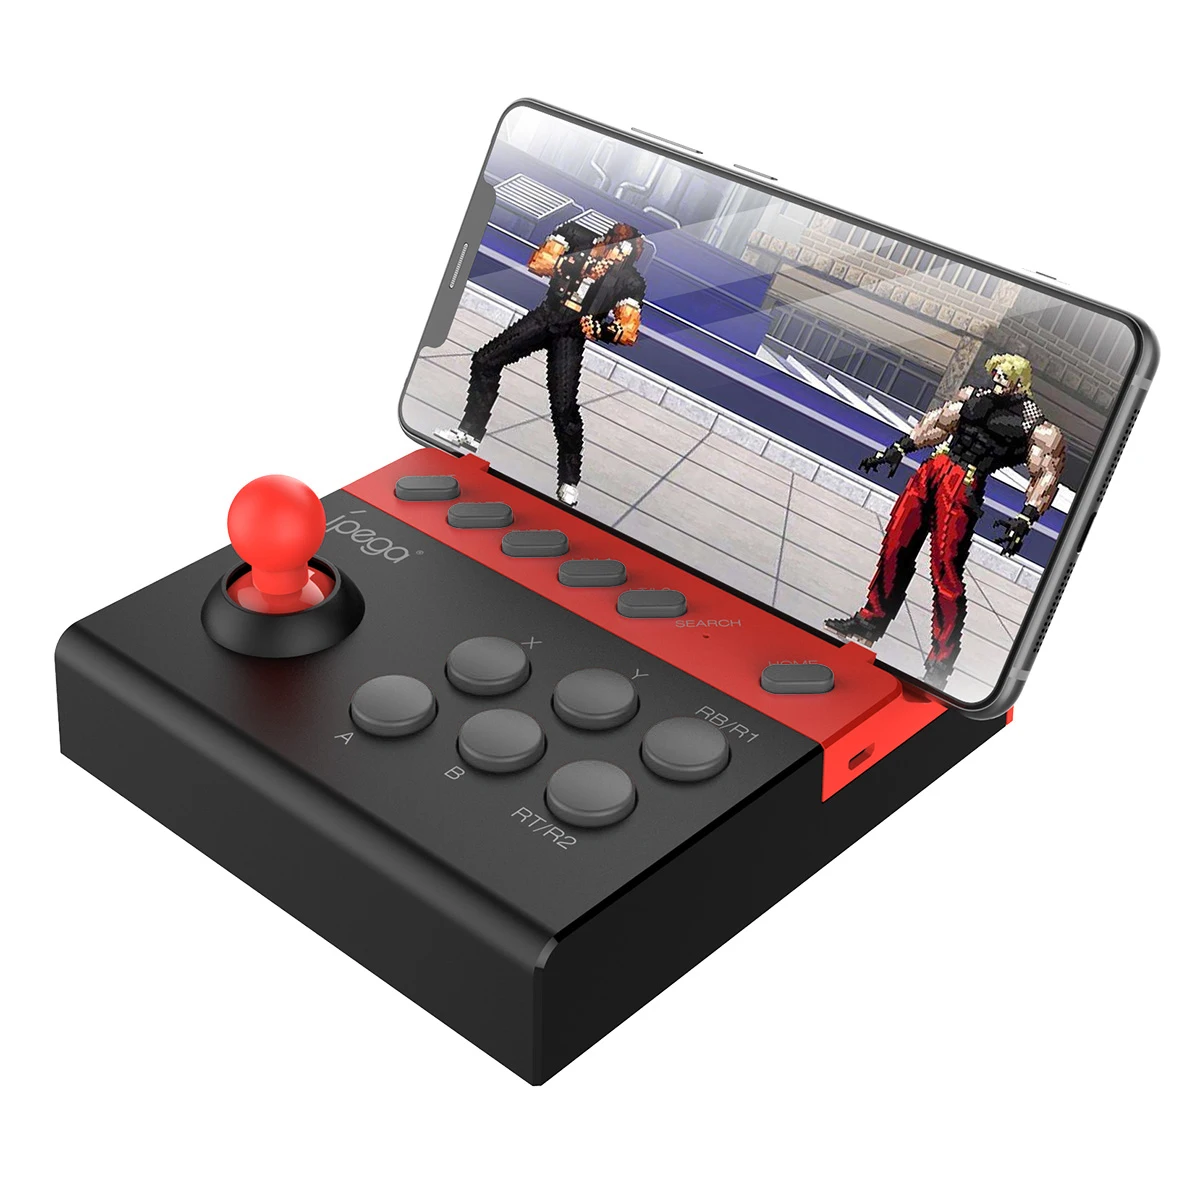 

IPEGA PG-9135 Wireless joystick handle mobile arcade fighting game controller